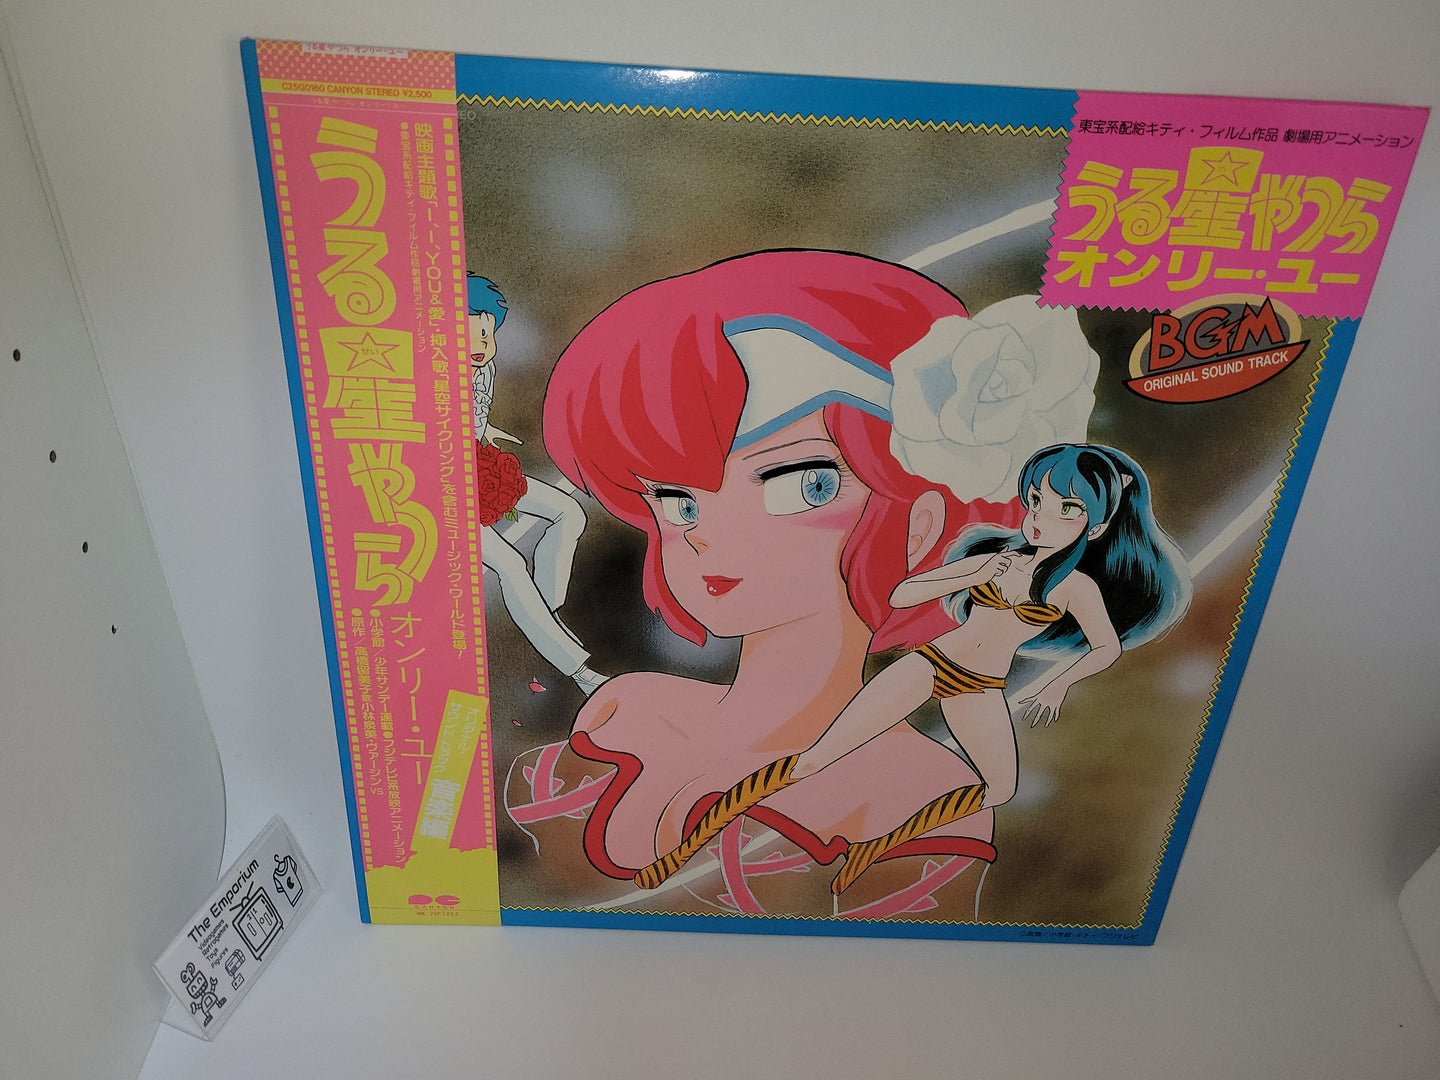 Urusei Yatsura Only You BGM ORIGINAL SOUND TRACK Vinyl Record - japanese original soundtrack japan vinyl disc LP